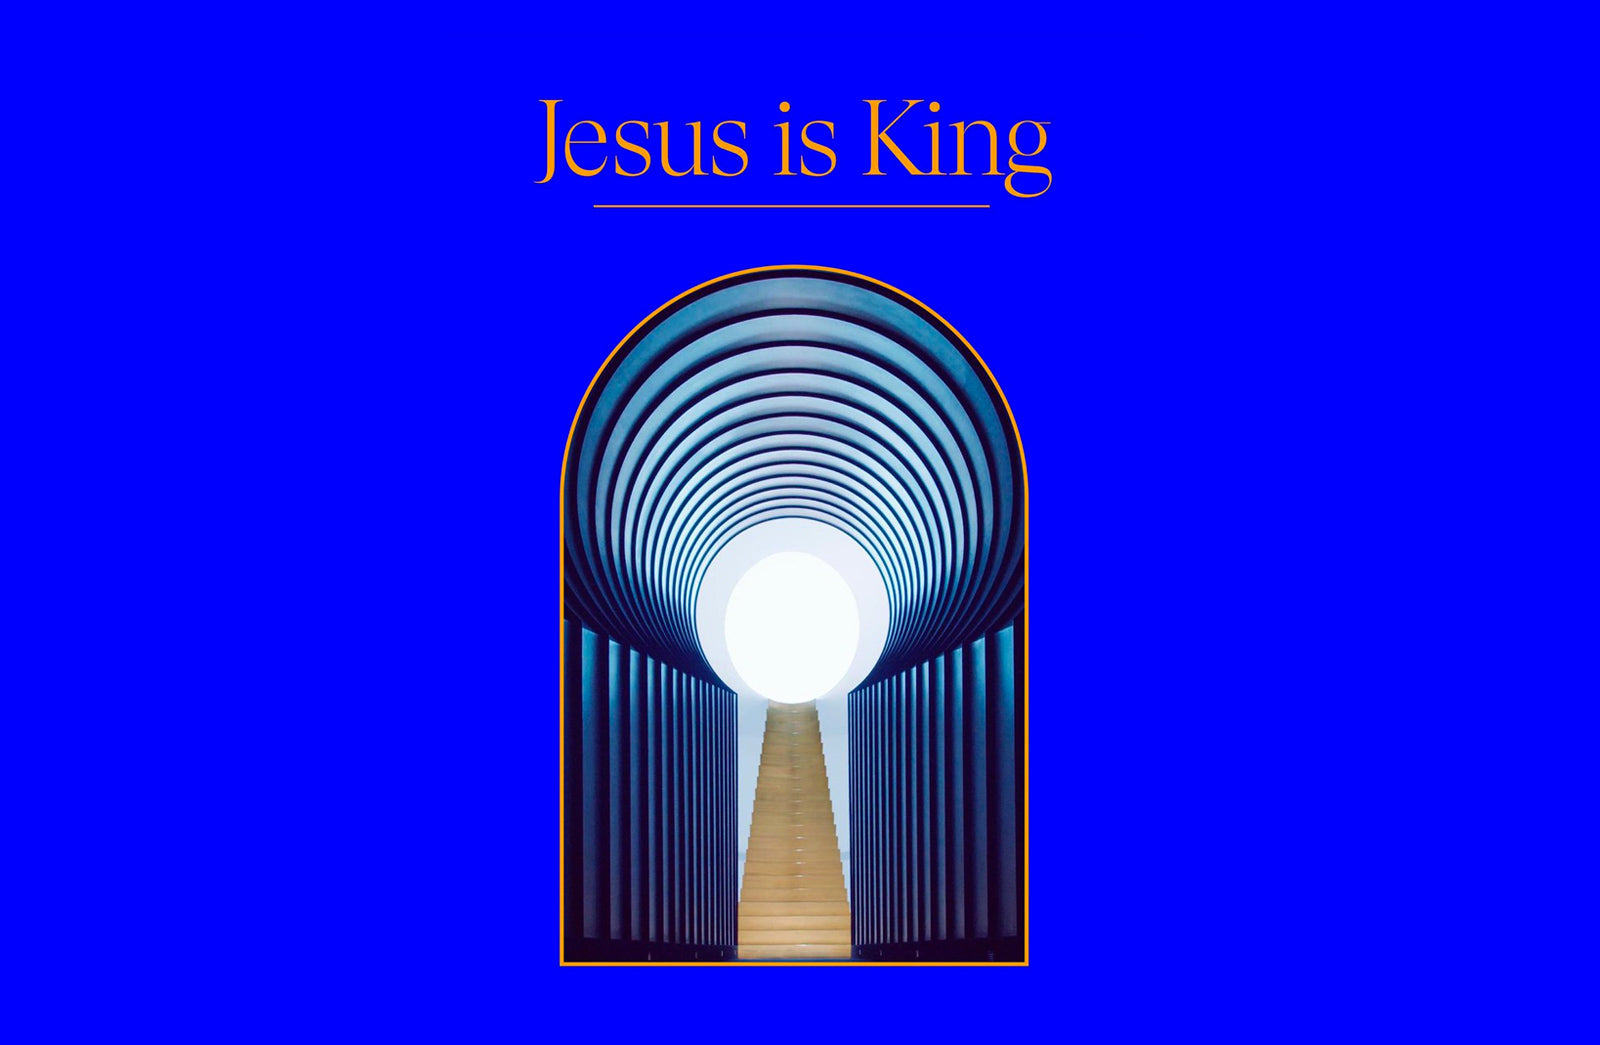 Jesus is King Kanye West Merch